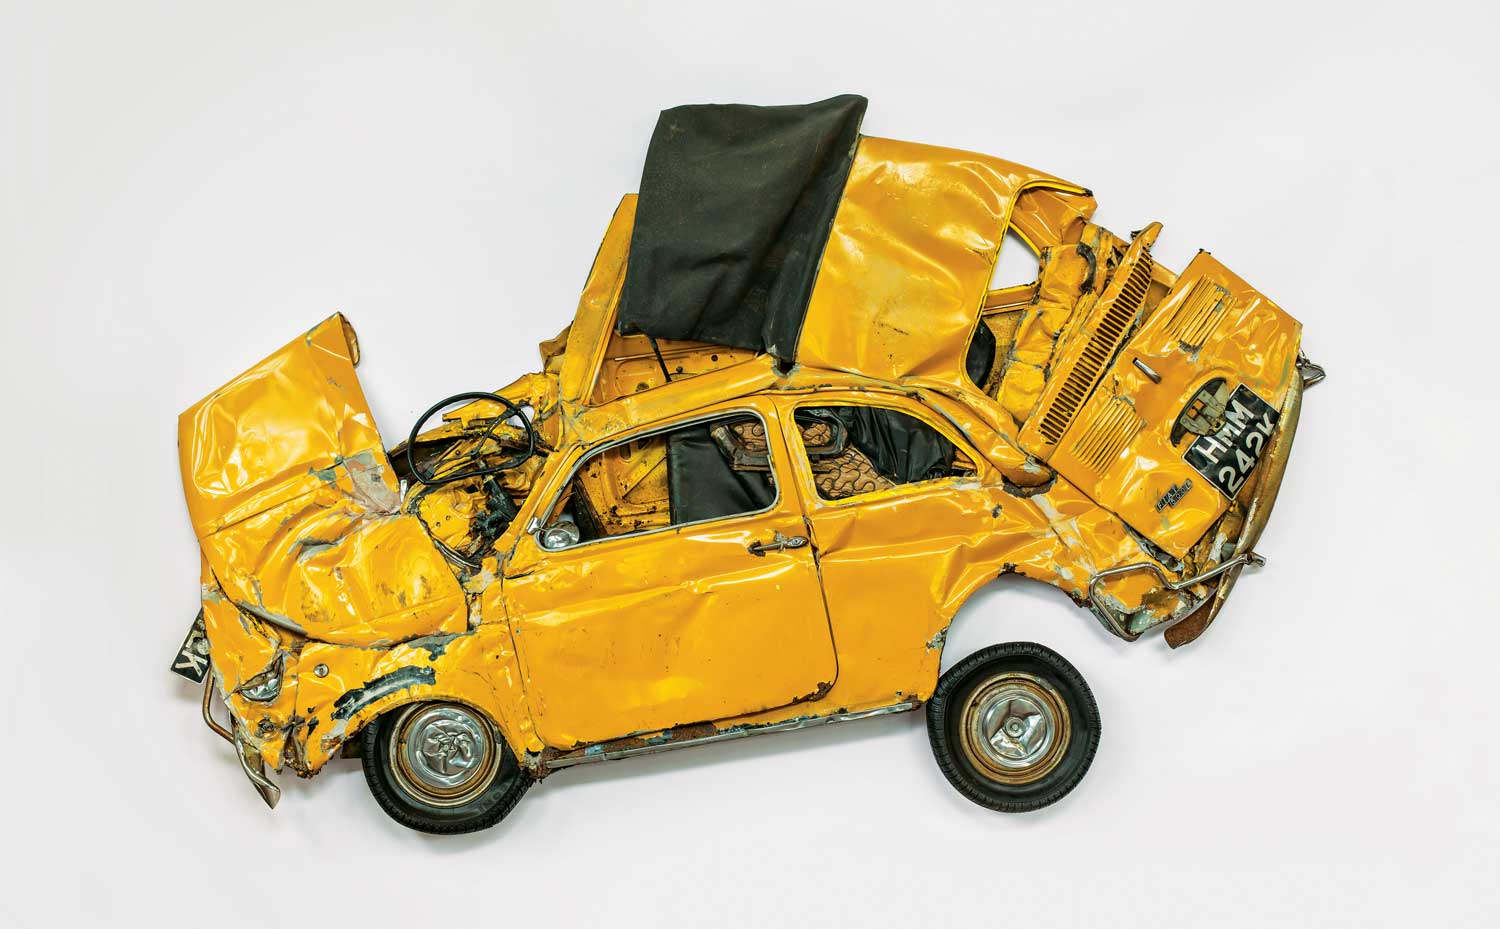 Ron Arad's Yellow Flattened Fiat Car Sculpture